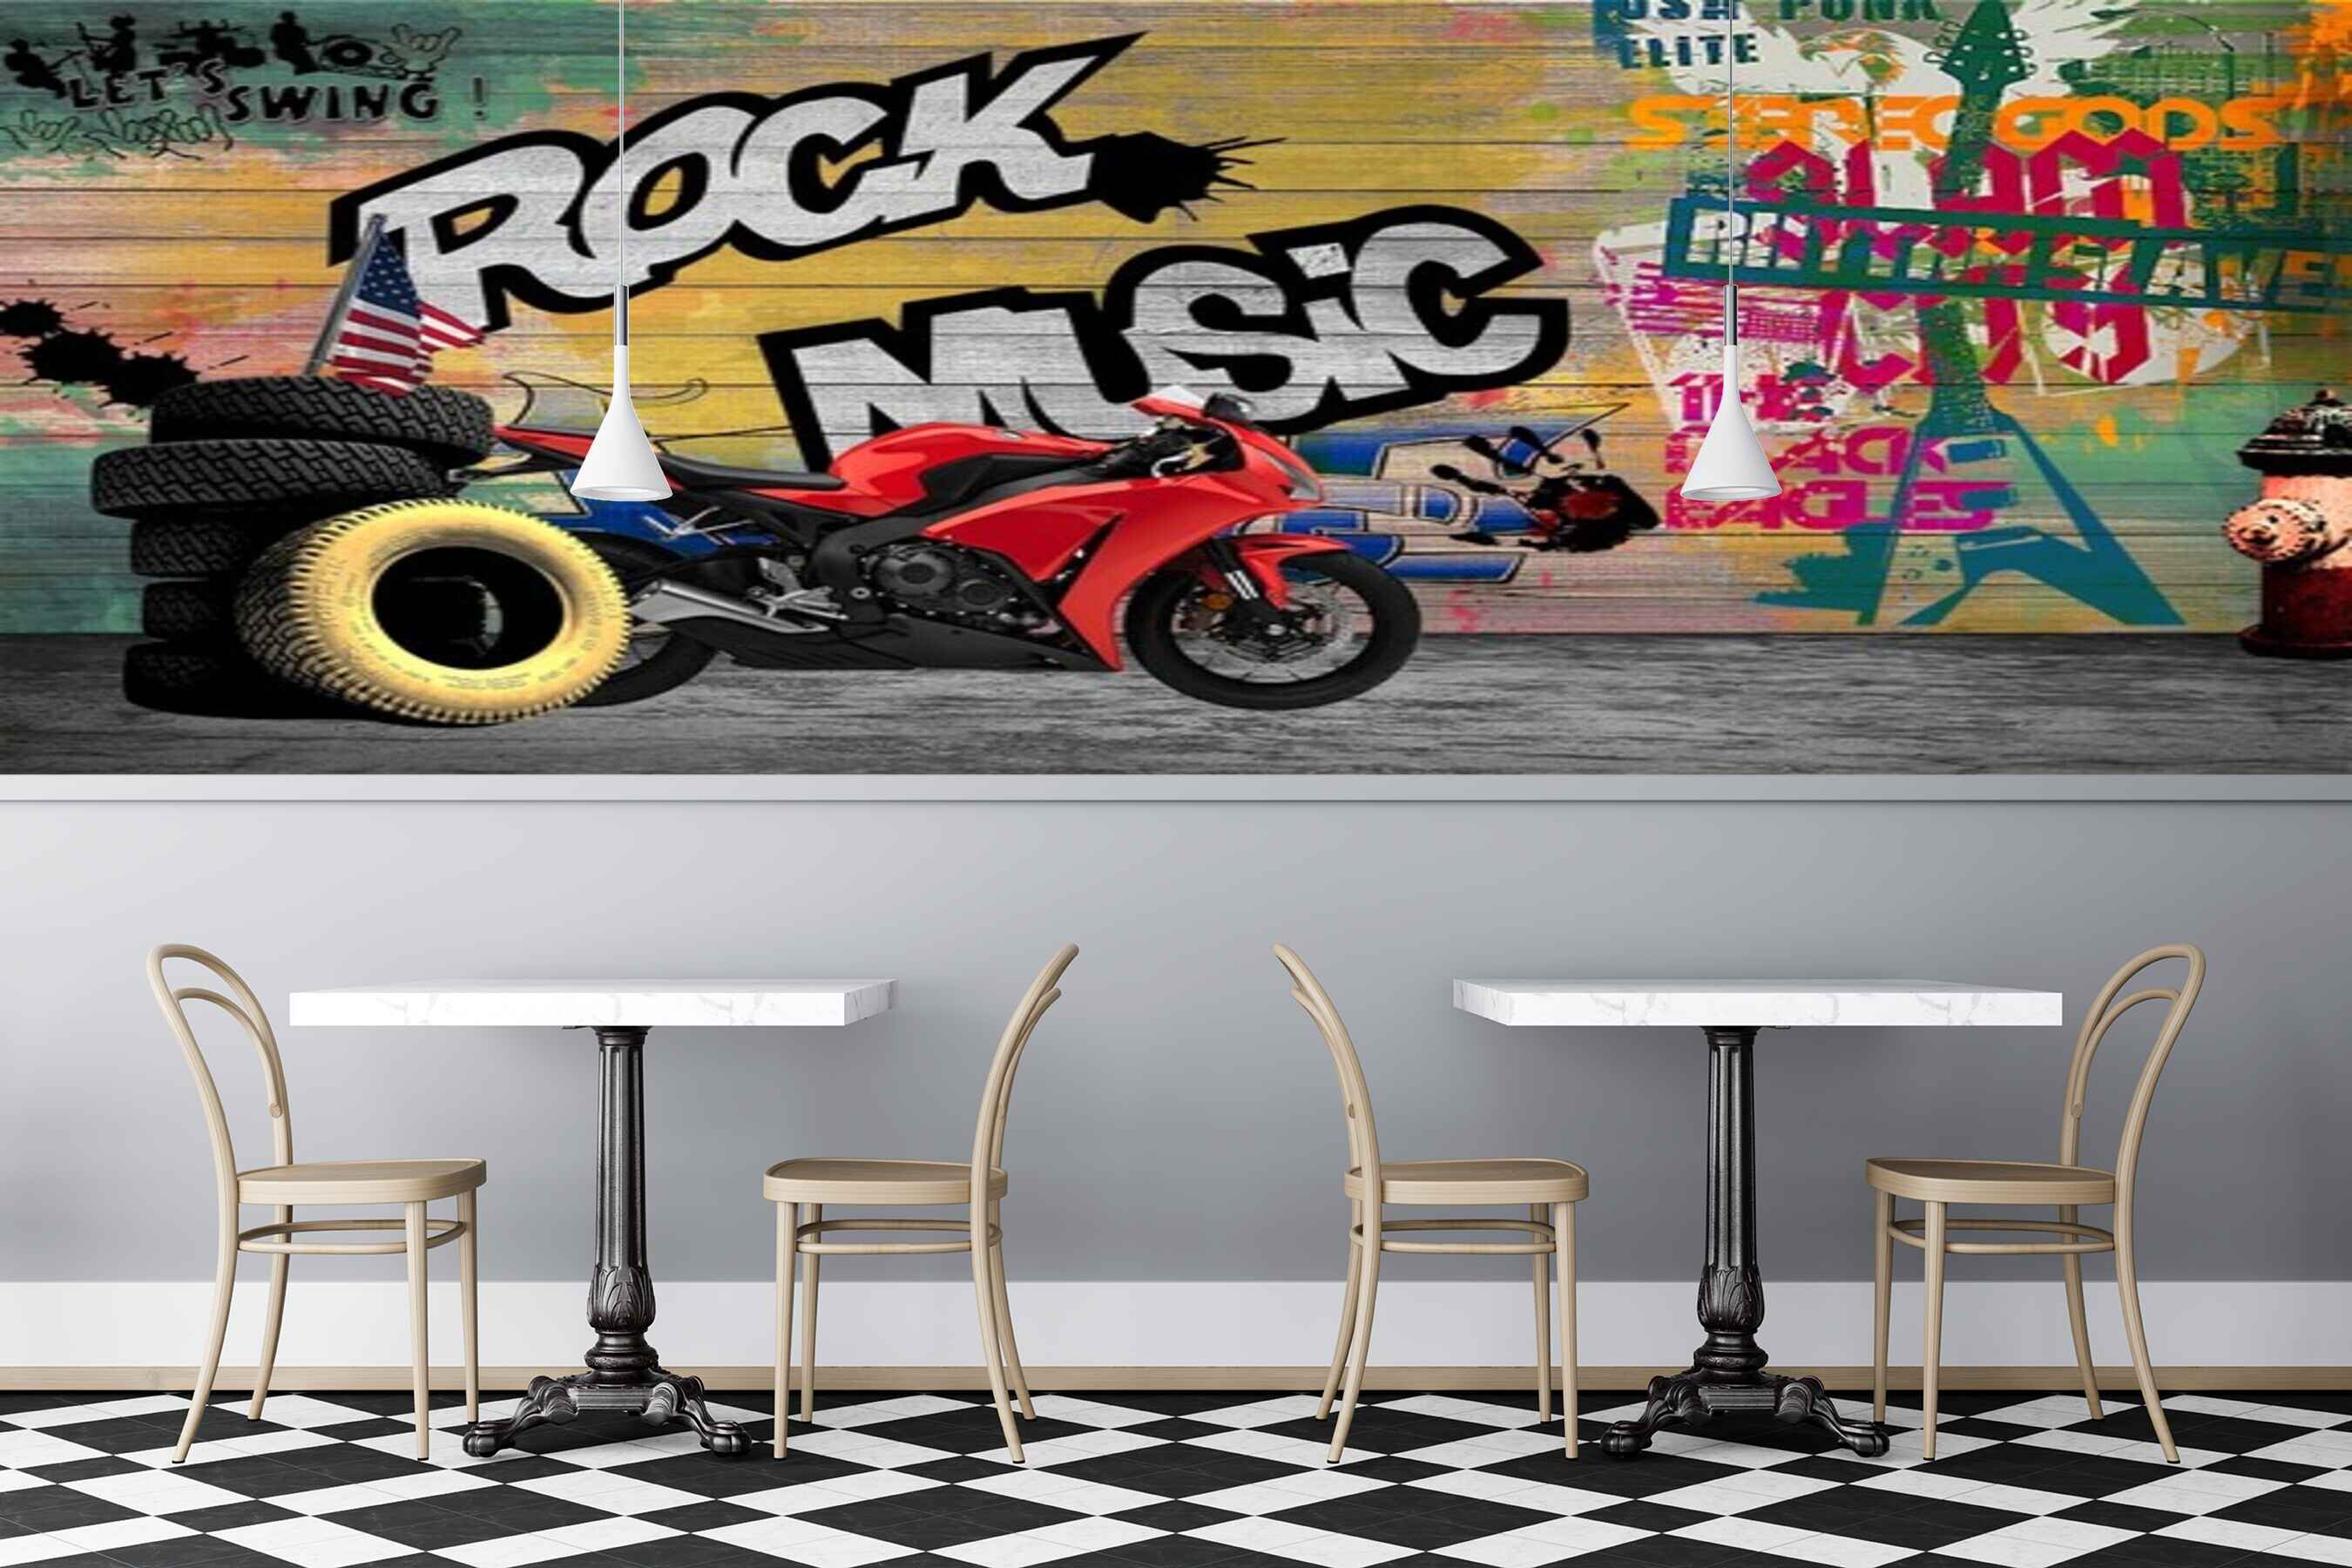 Avikalp MWZ3521 Rock Music Red Bike Tyres HD Wallpaper for Disco Club Karaoke